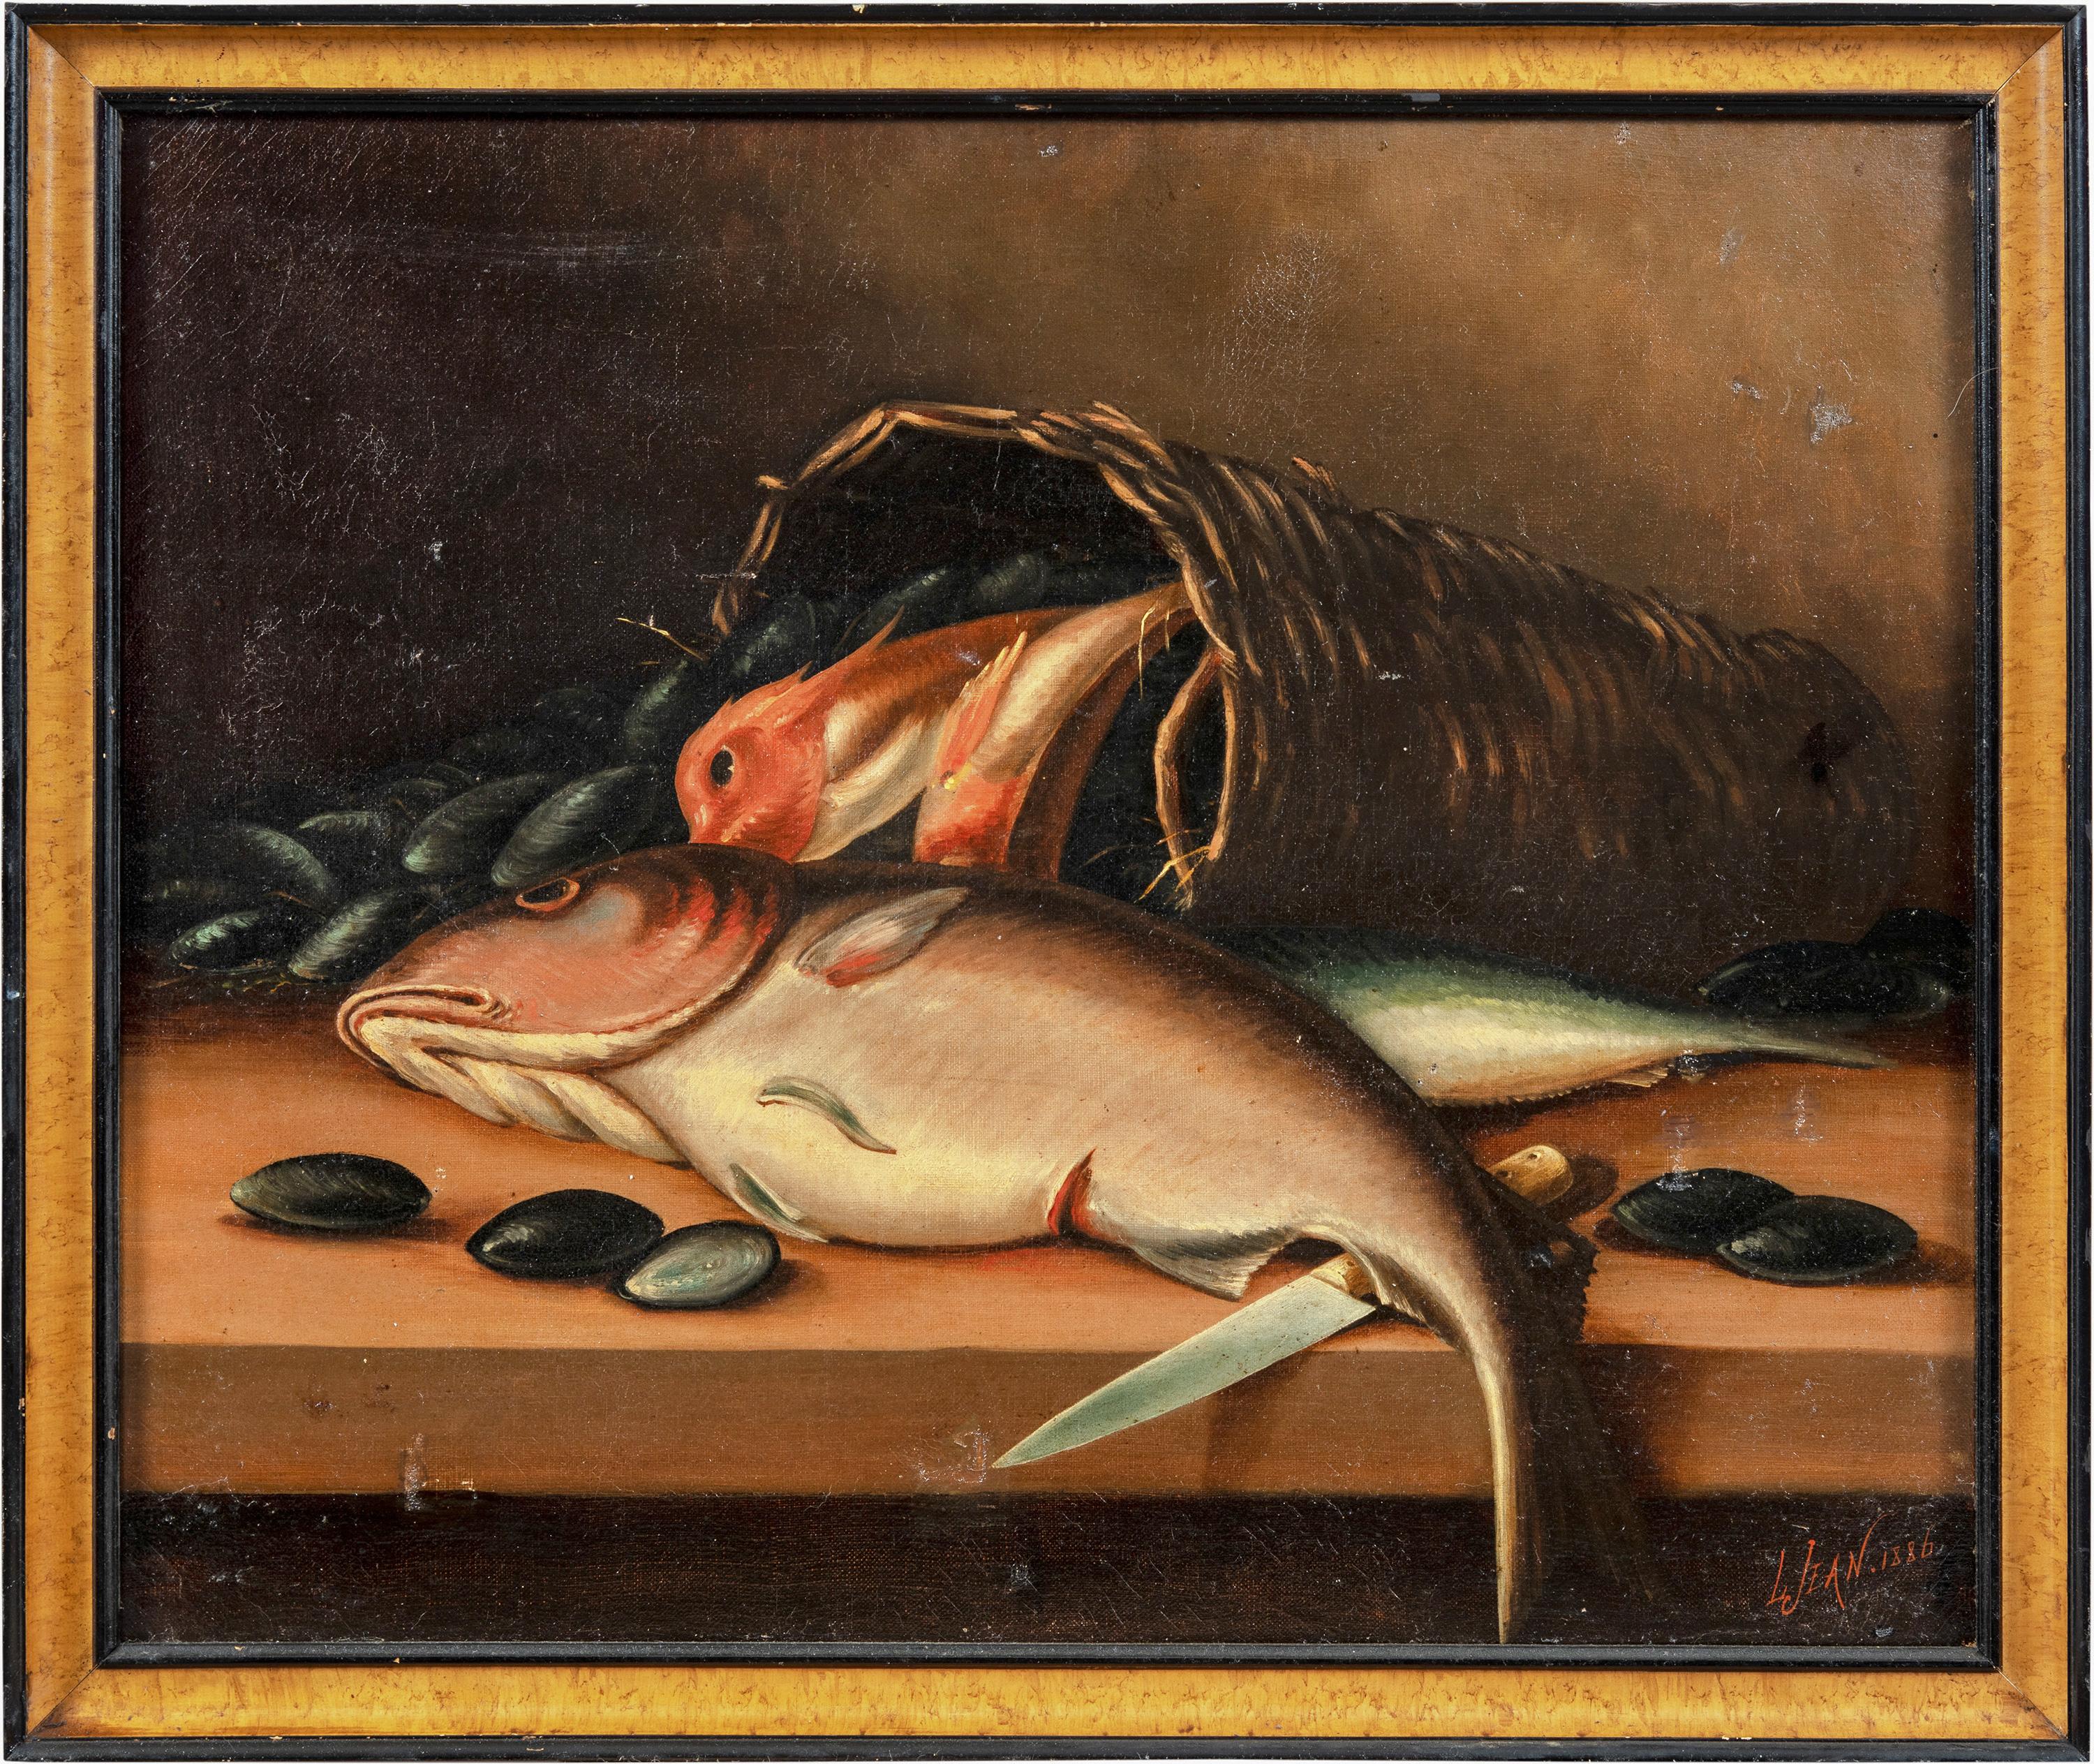 L. Jean (British school) - 19th century still life painting - Fish 